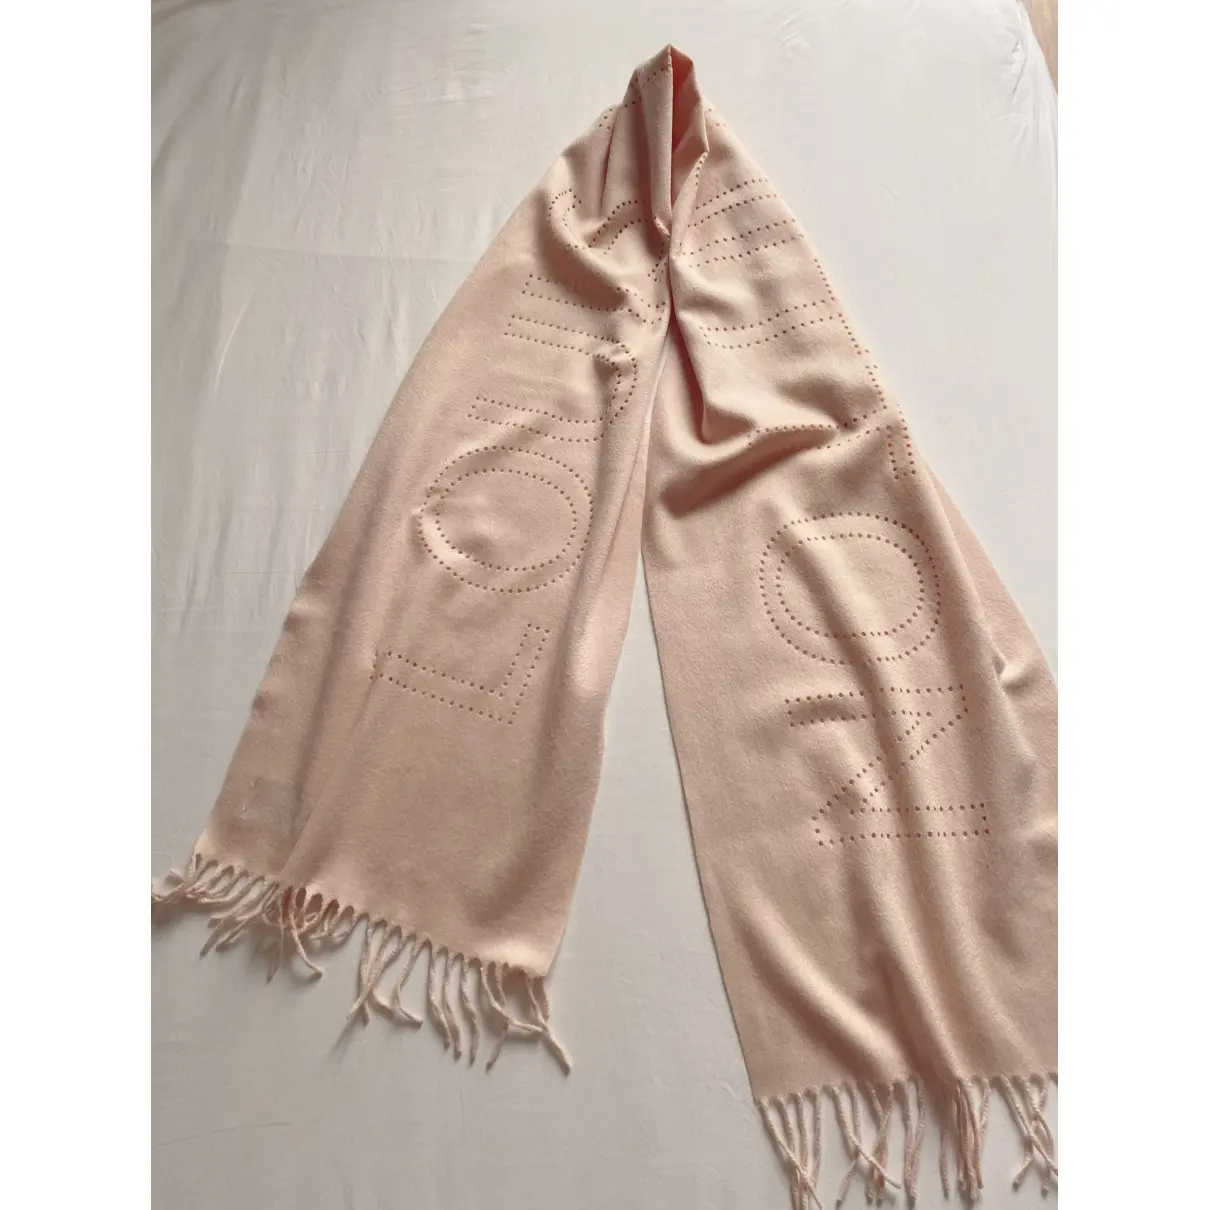 Cardiff cashmere scarf Louis Vuitton